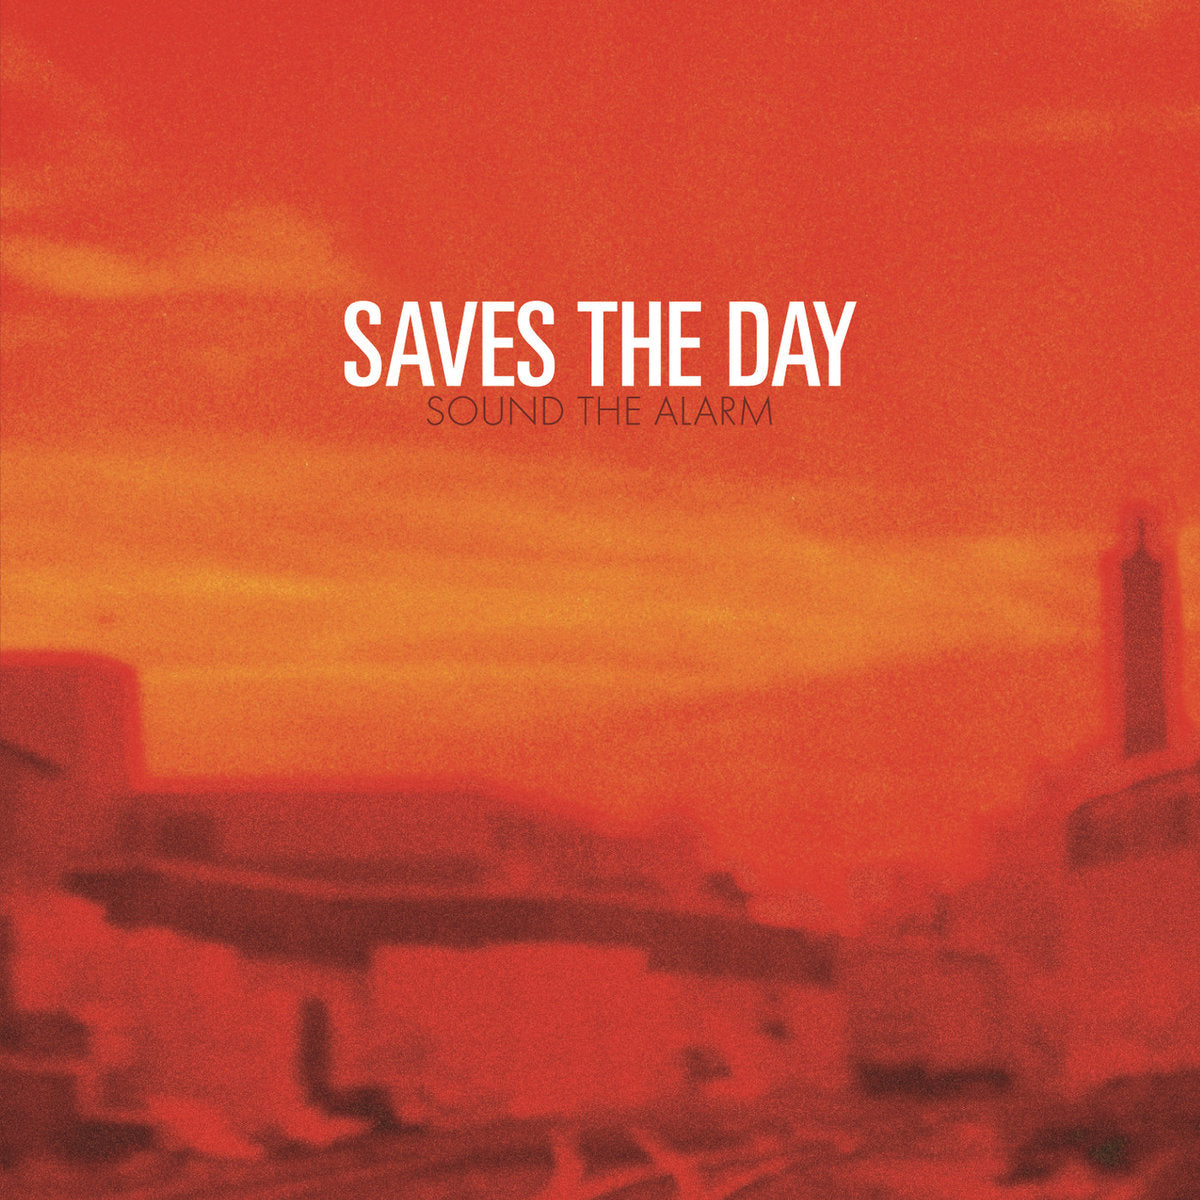 Saves The Day "Sound The Alarm" 2x10" Vinyl